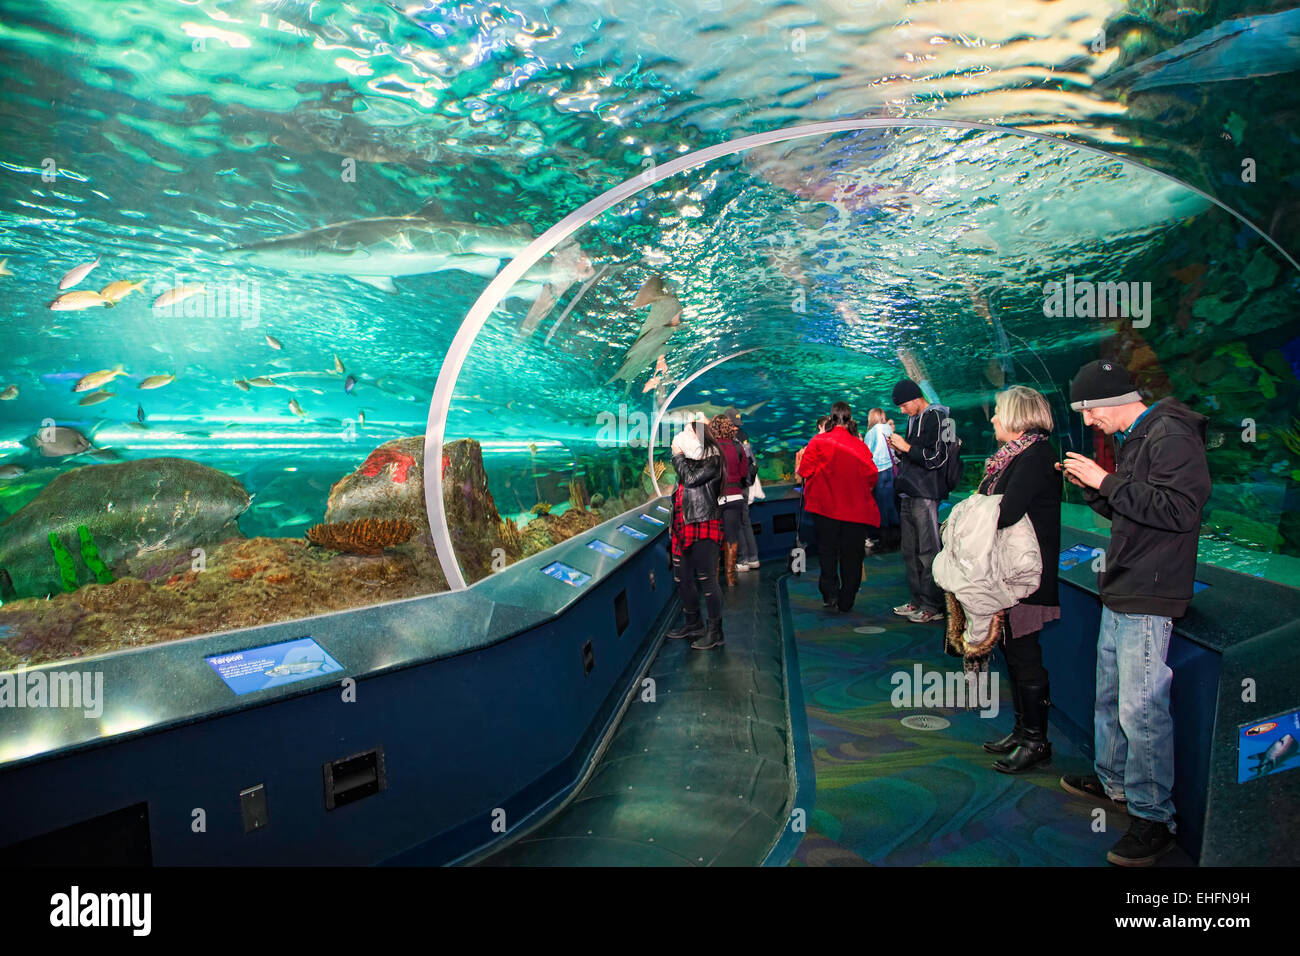 Ripleys Aquarium in Toronto,Ontario.;Canada, tourist attraction near